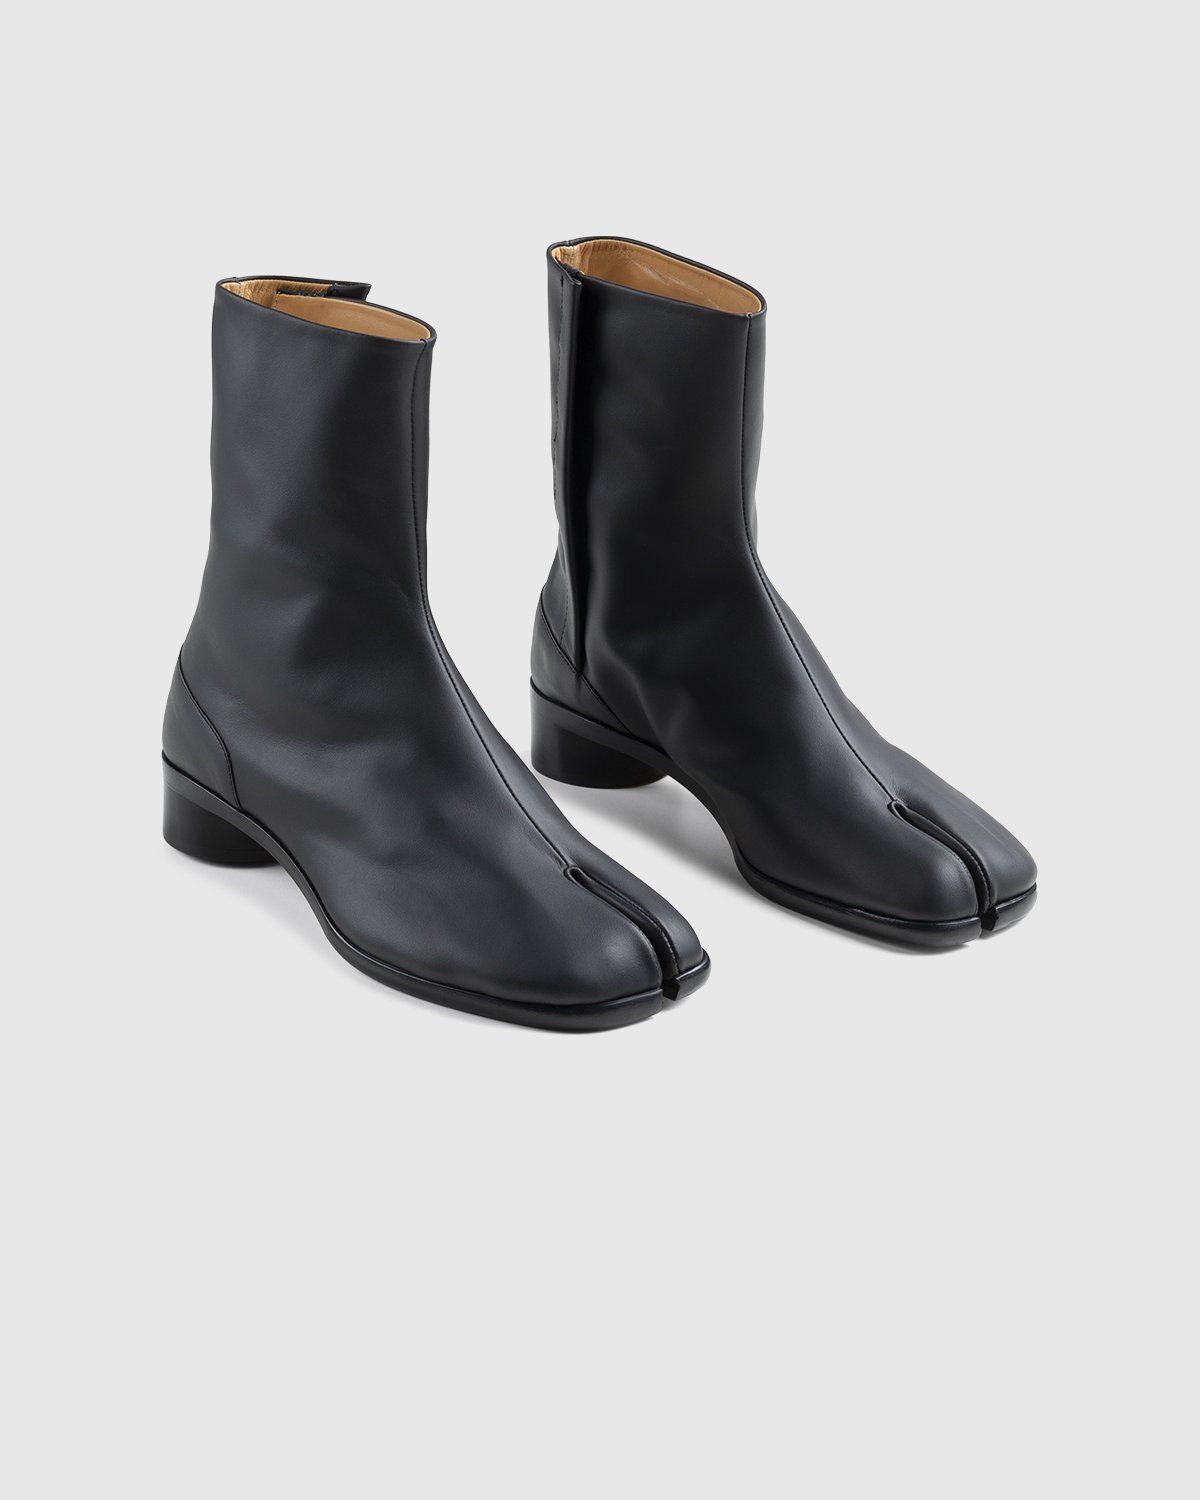 Maison Margiela – Tabi Ankle Boot Black | Highsnobiety Shop